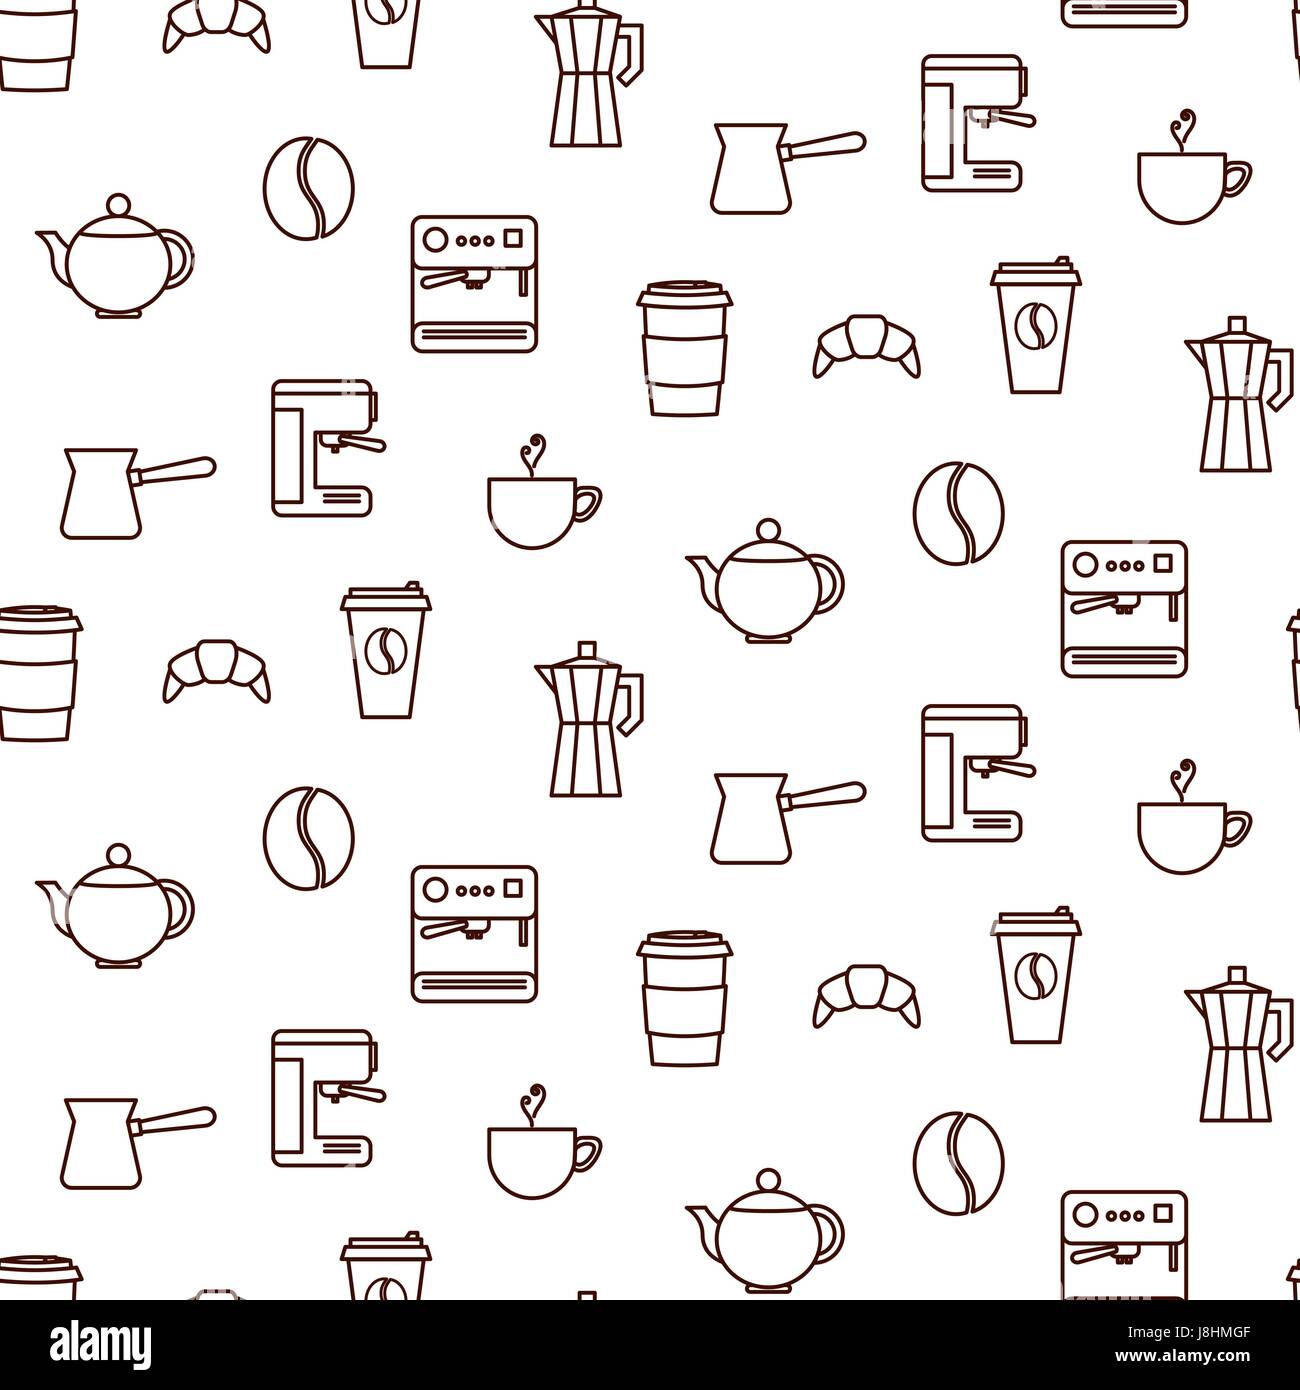 https://c8.alamy.com/comp/J8HMGF/coffee-line-icons-seamless-white-vector-pattern-espresso-shop-tools-J8HMGF.jpg